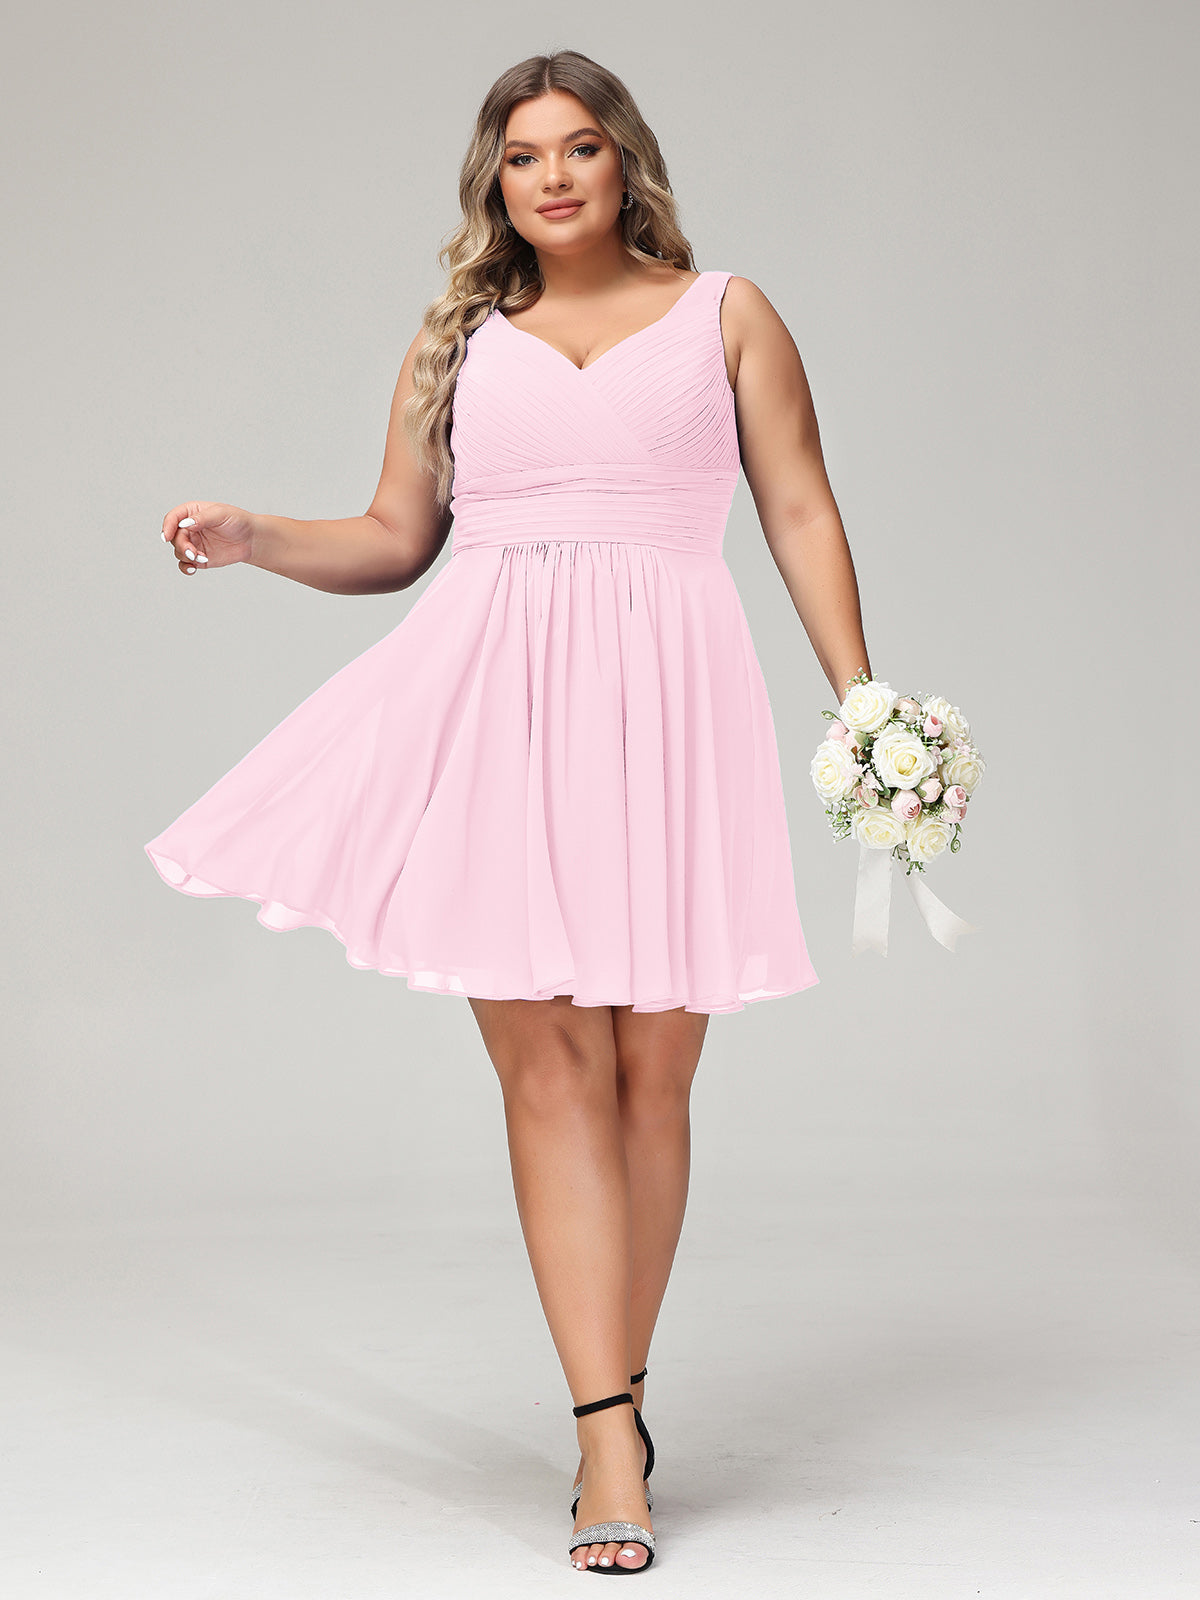 Pink Plus Size Dresses, Plus Size Light Pink Dresses